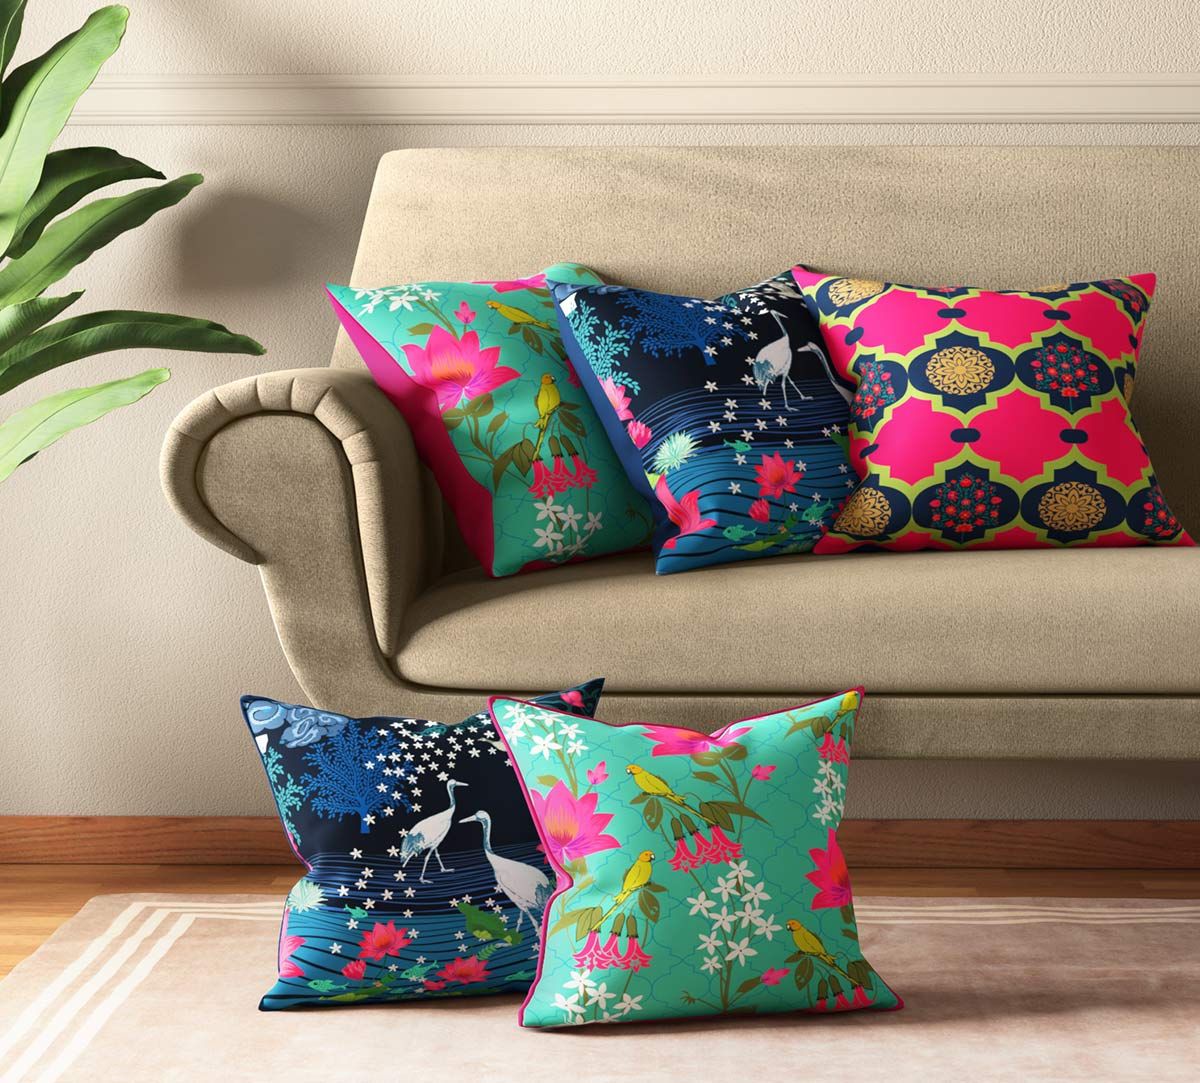 Shop for designer set of 5 cushion covers